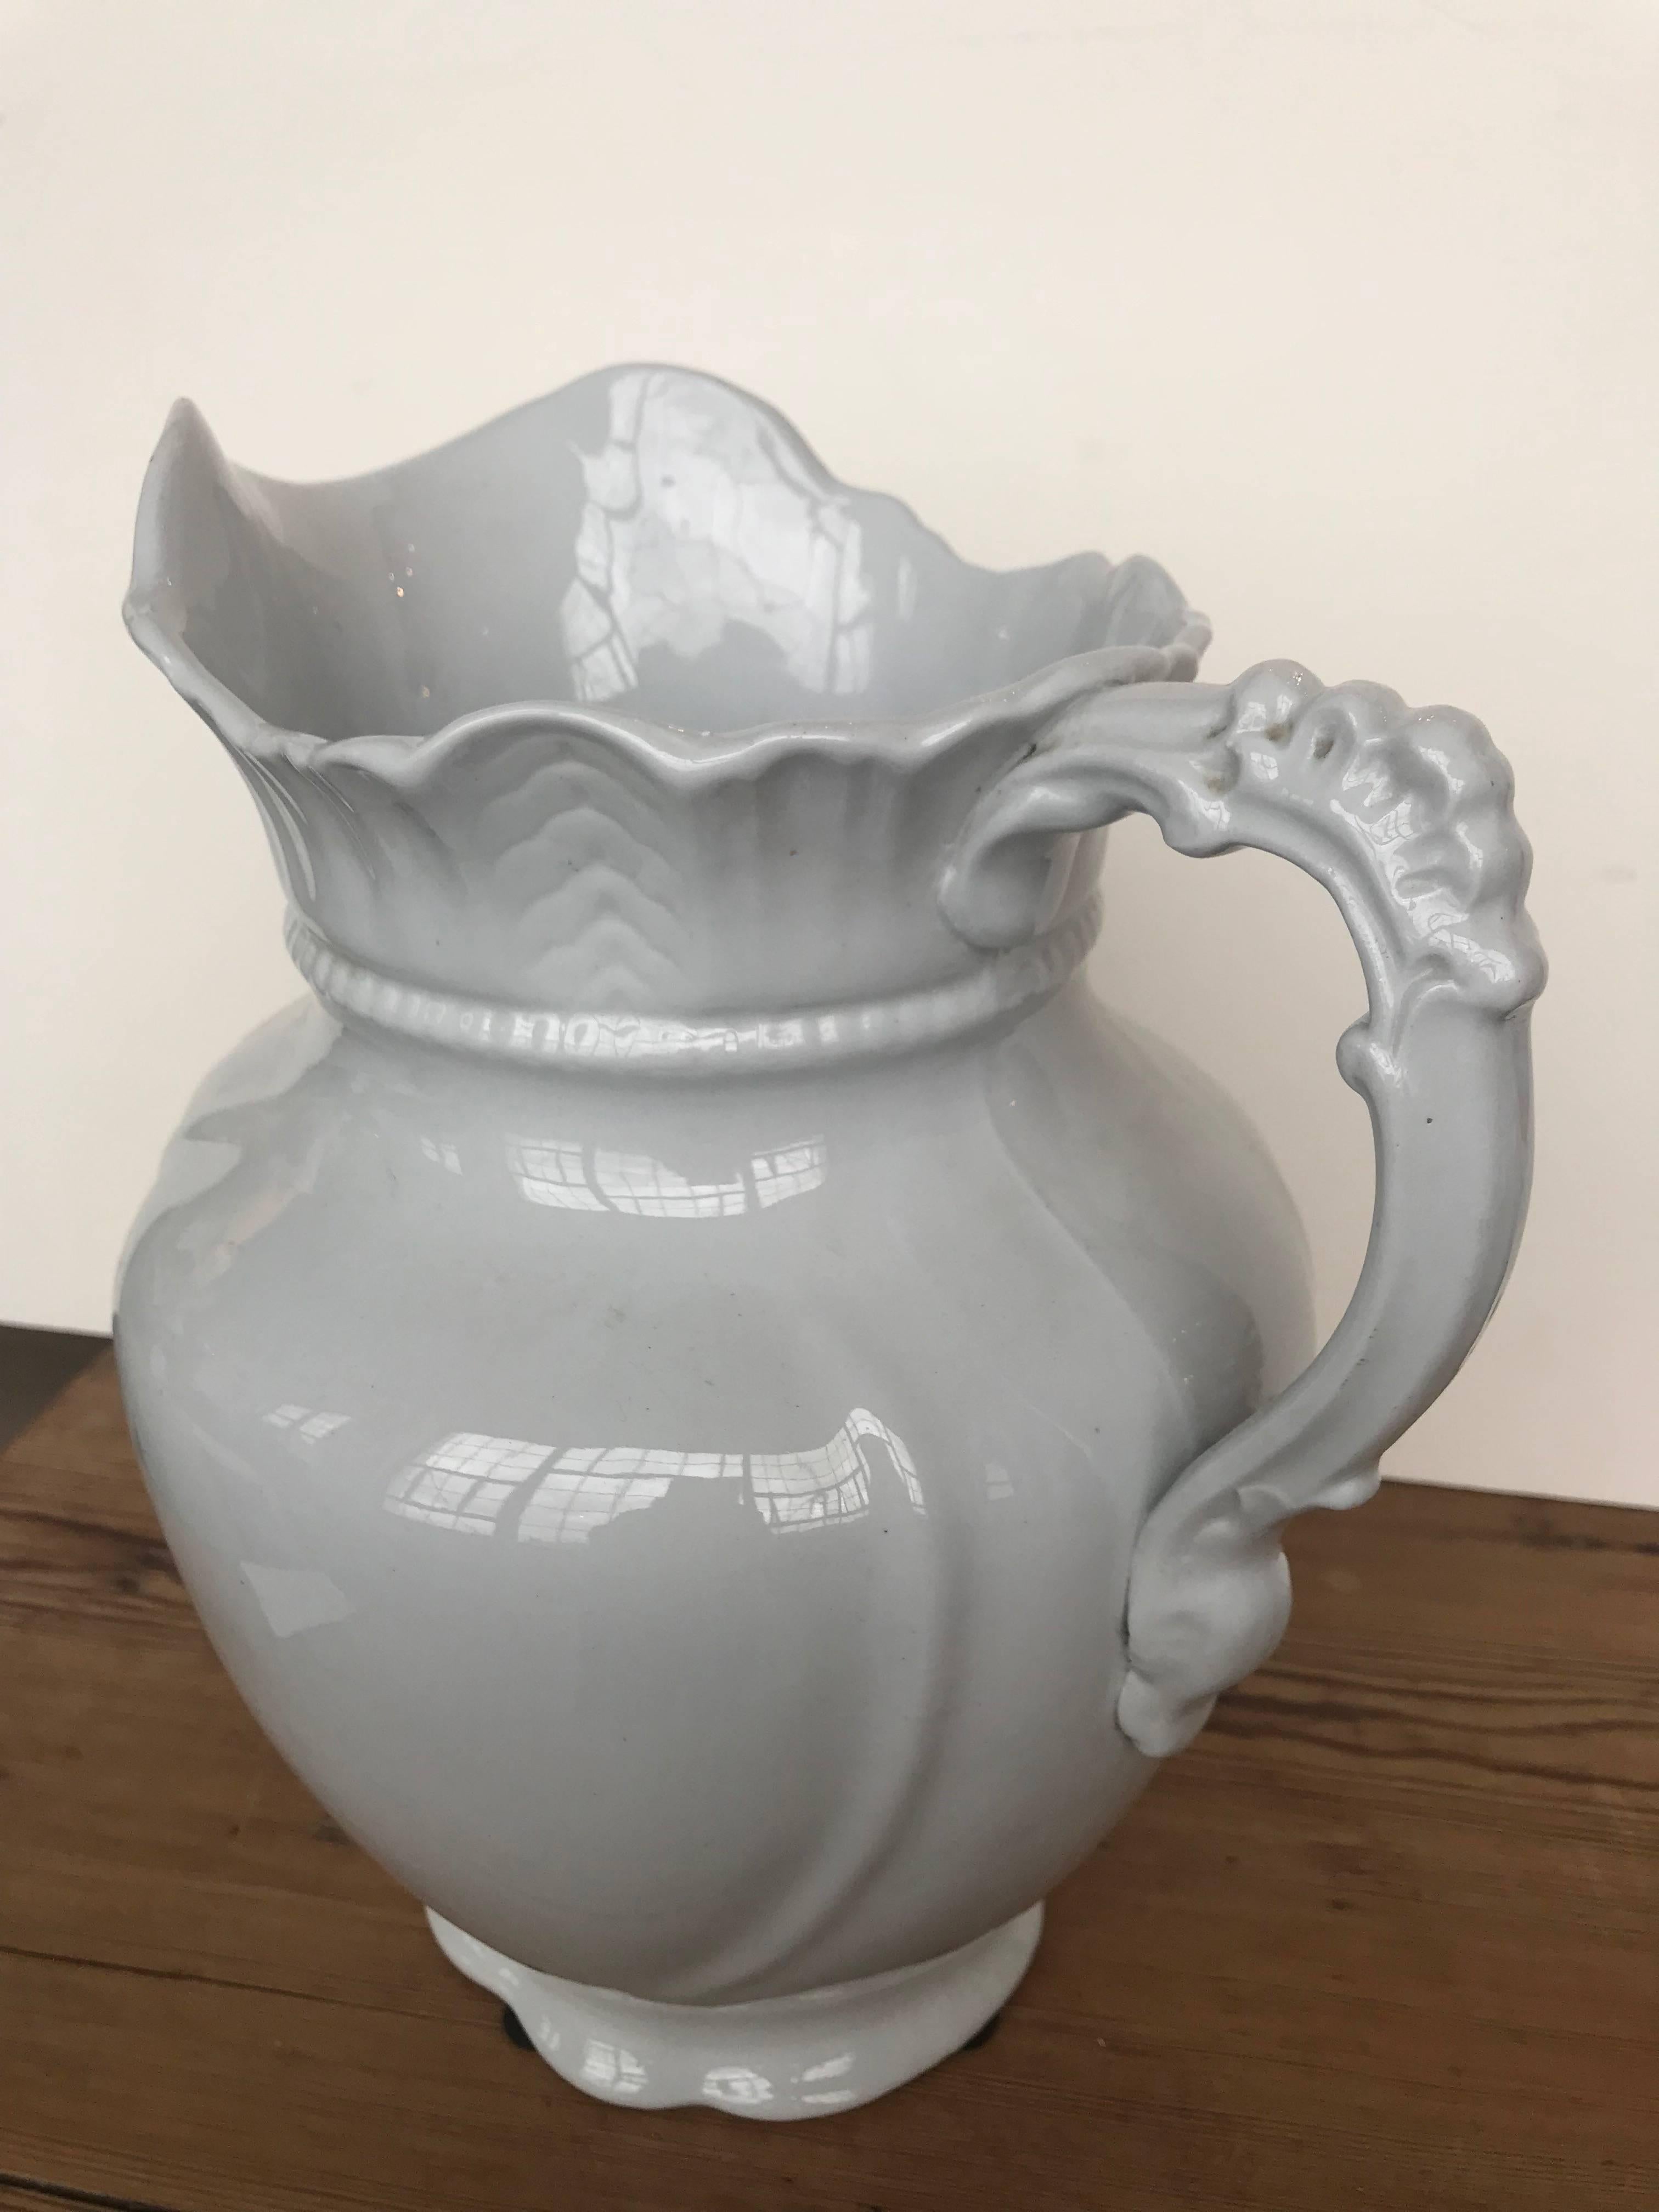 19th century ironstone pitcher.